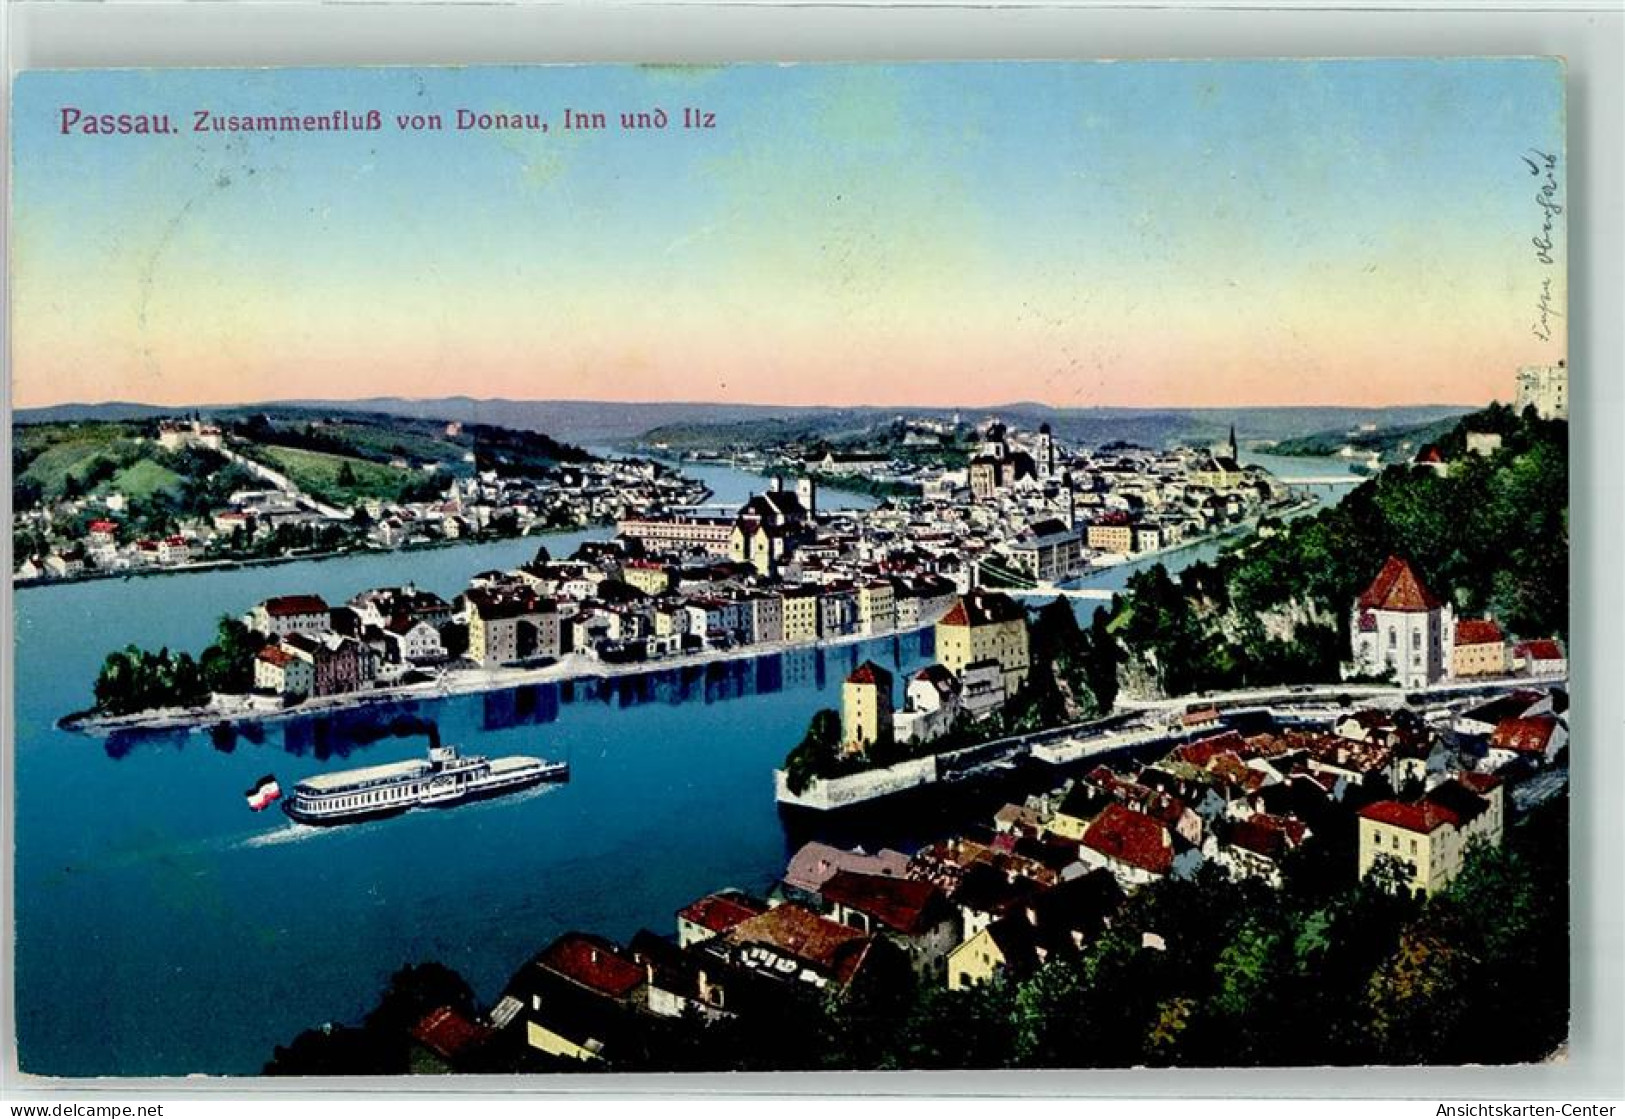 39365406 - Passau - Passau